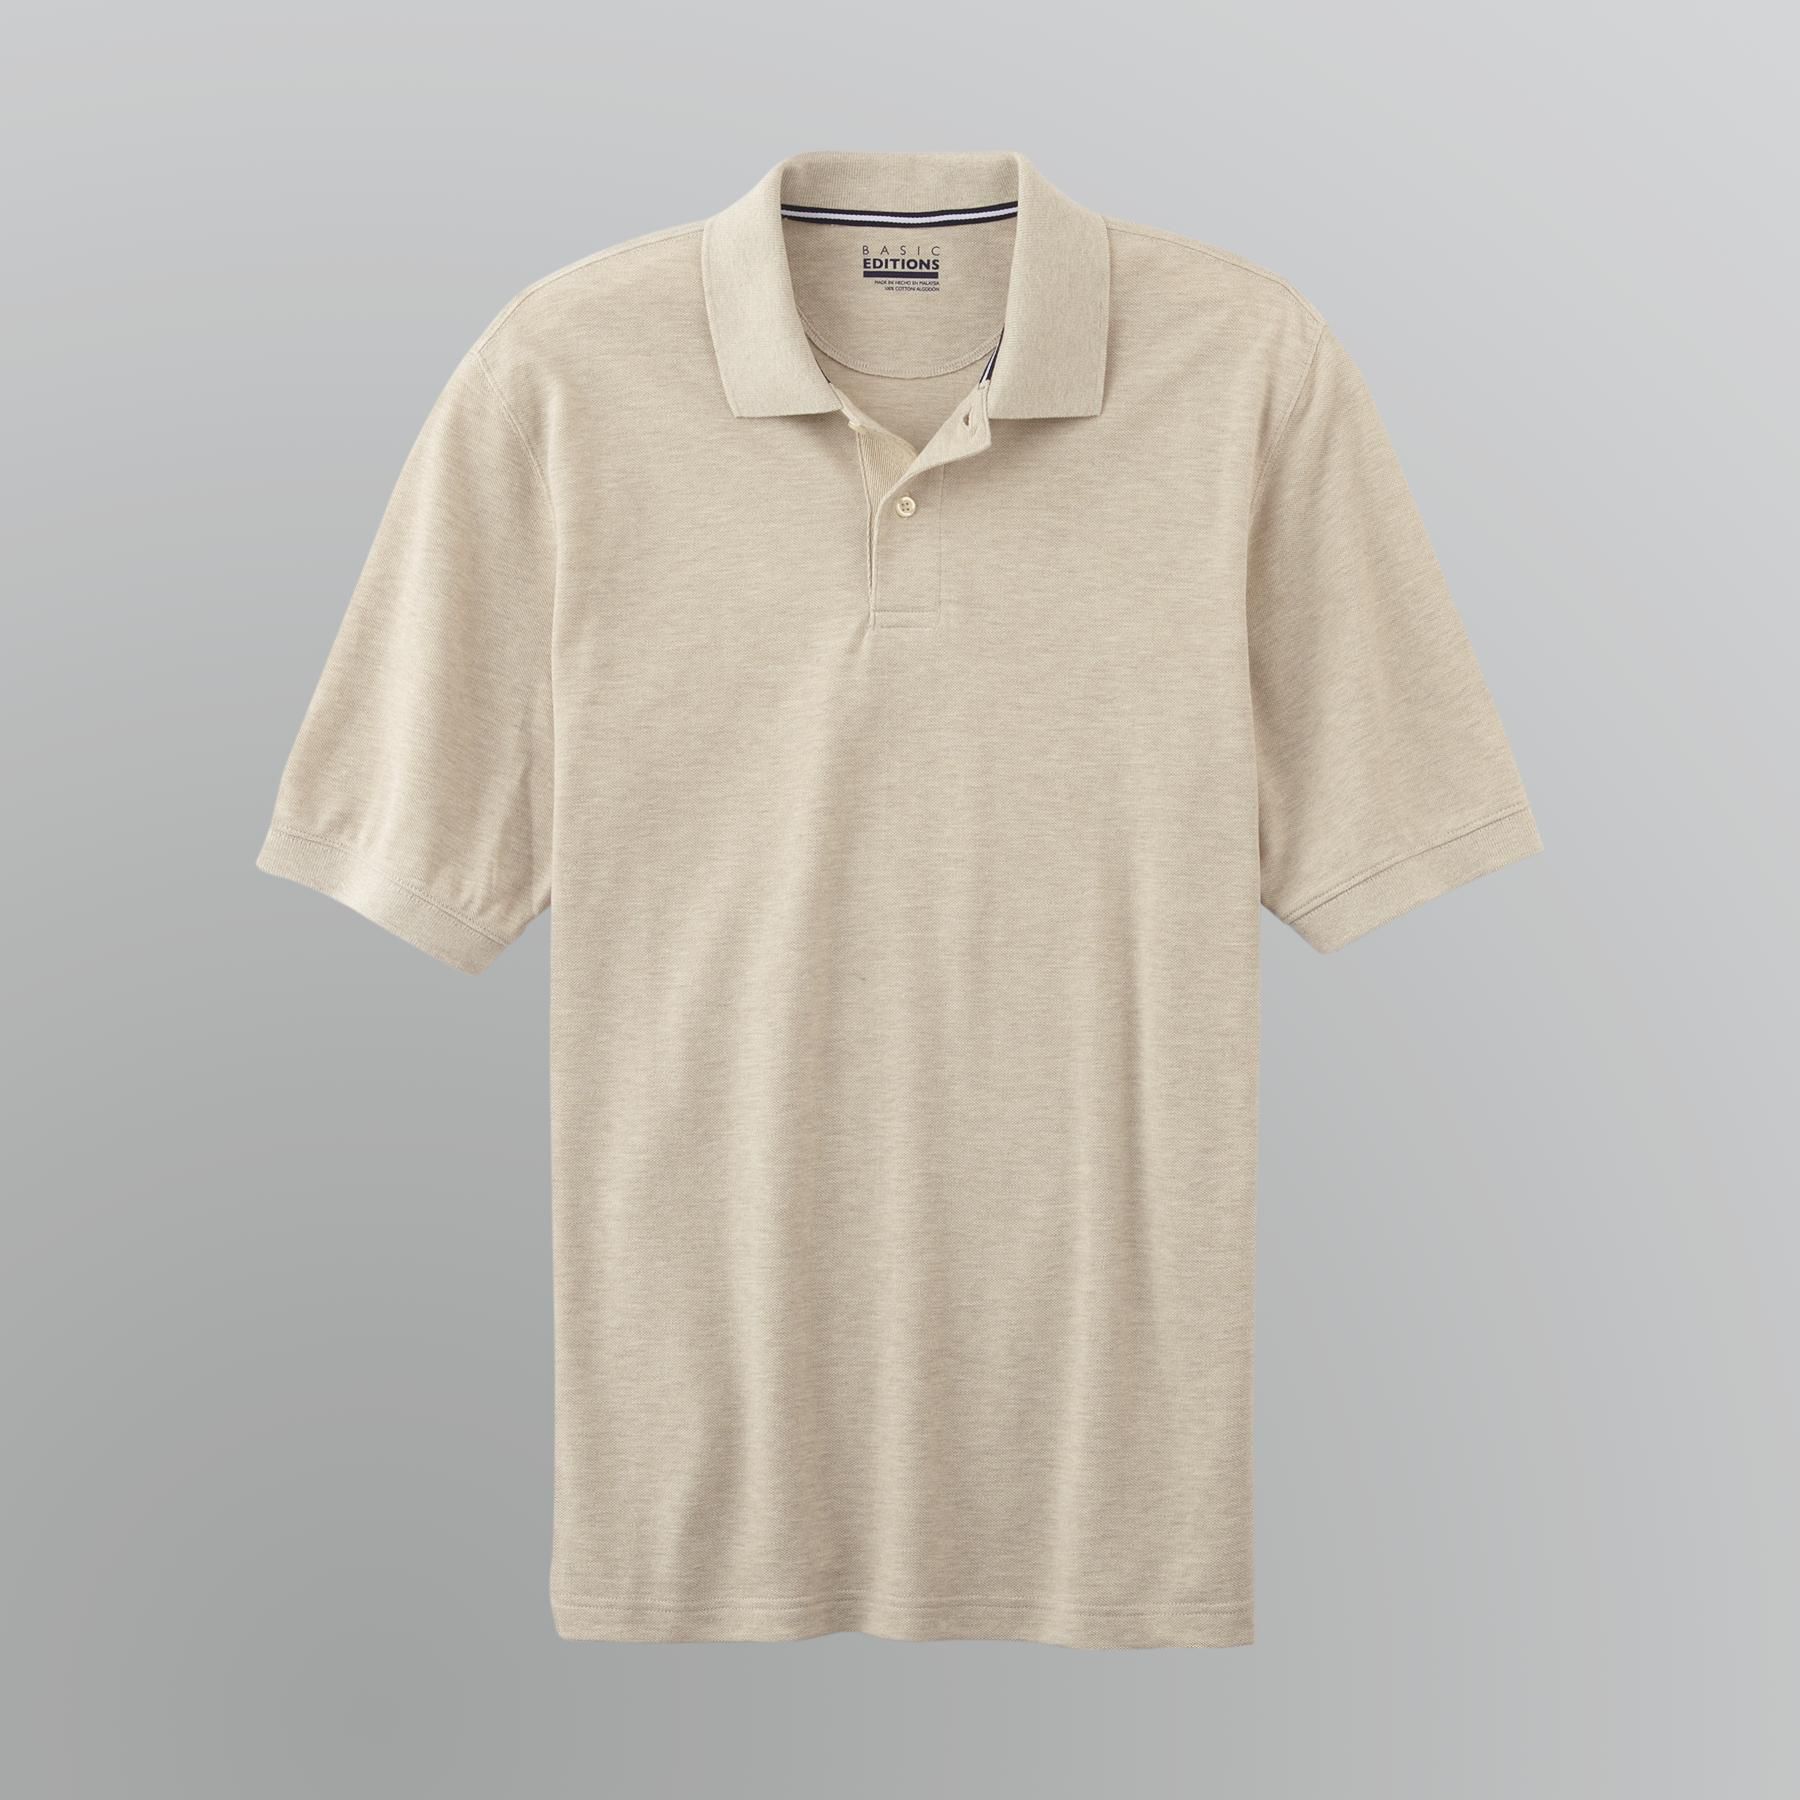 Basic Editions Men's Big & Tall Solid Polo Shirt